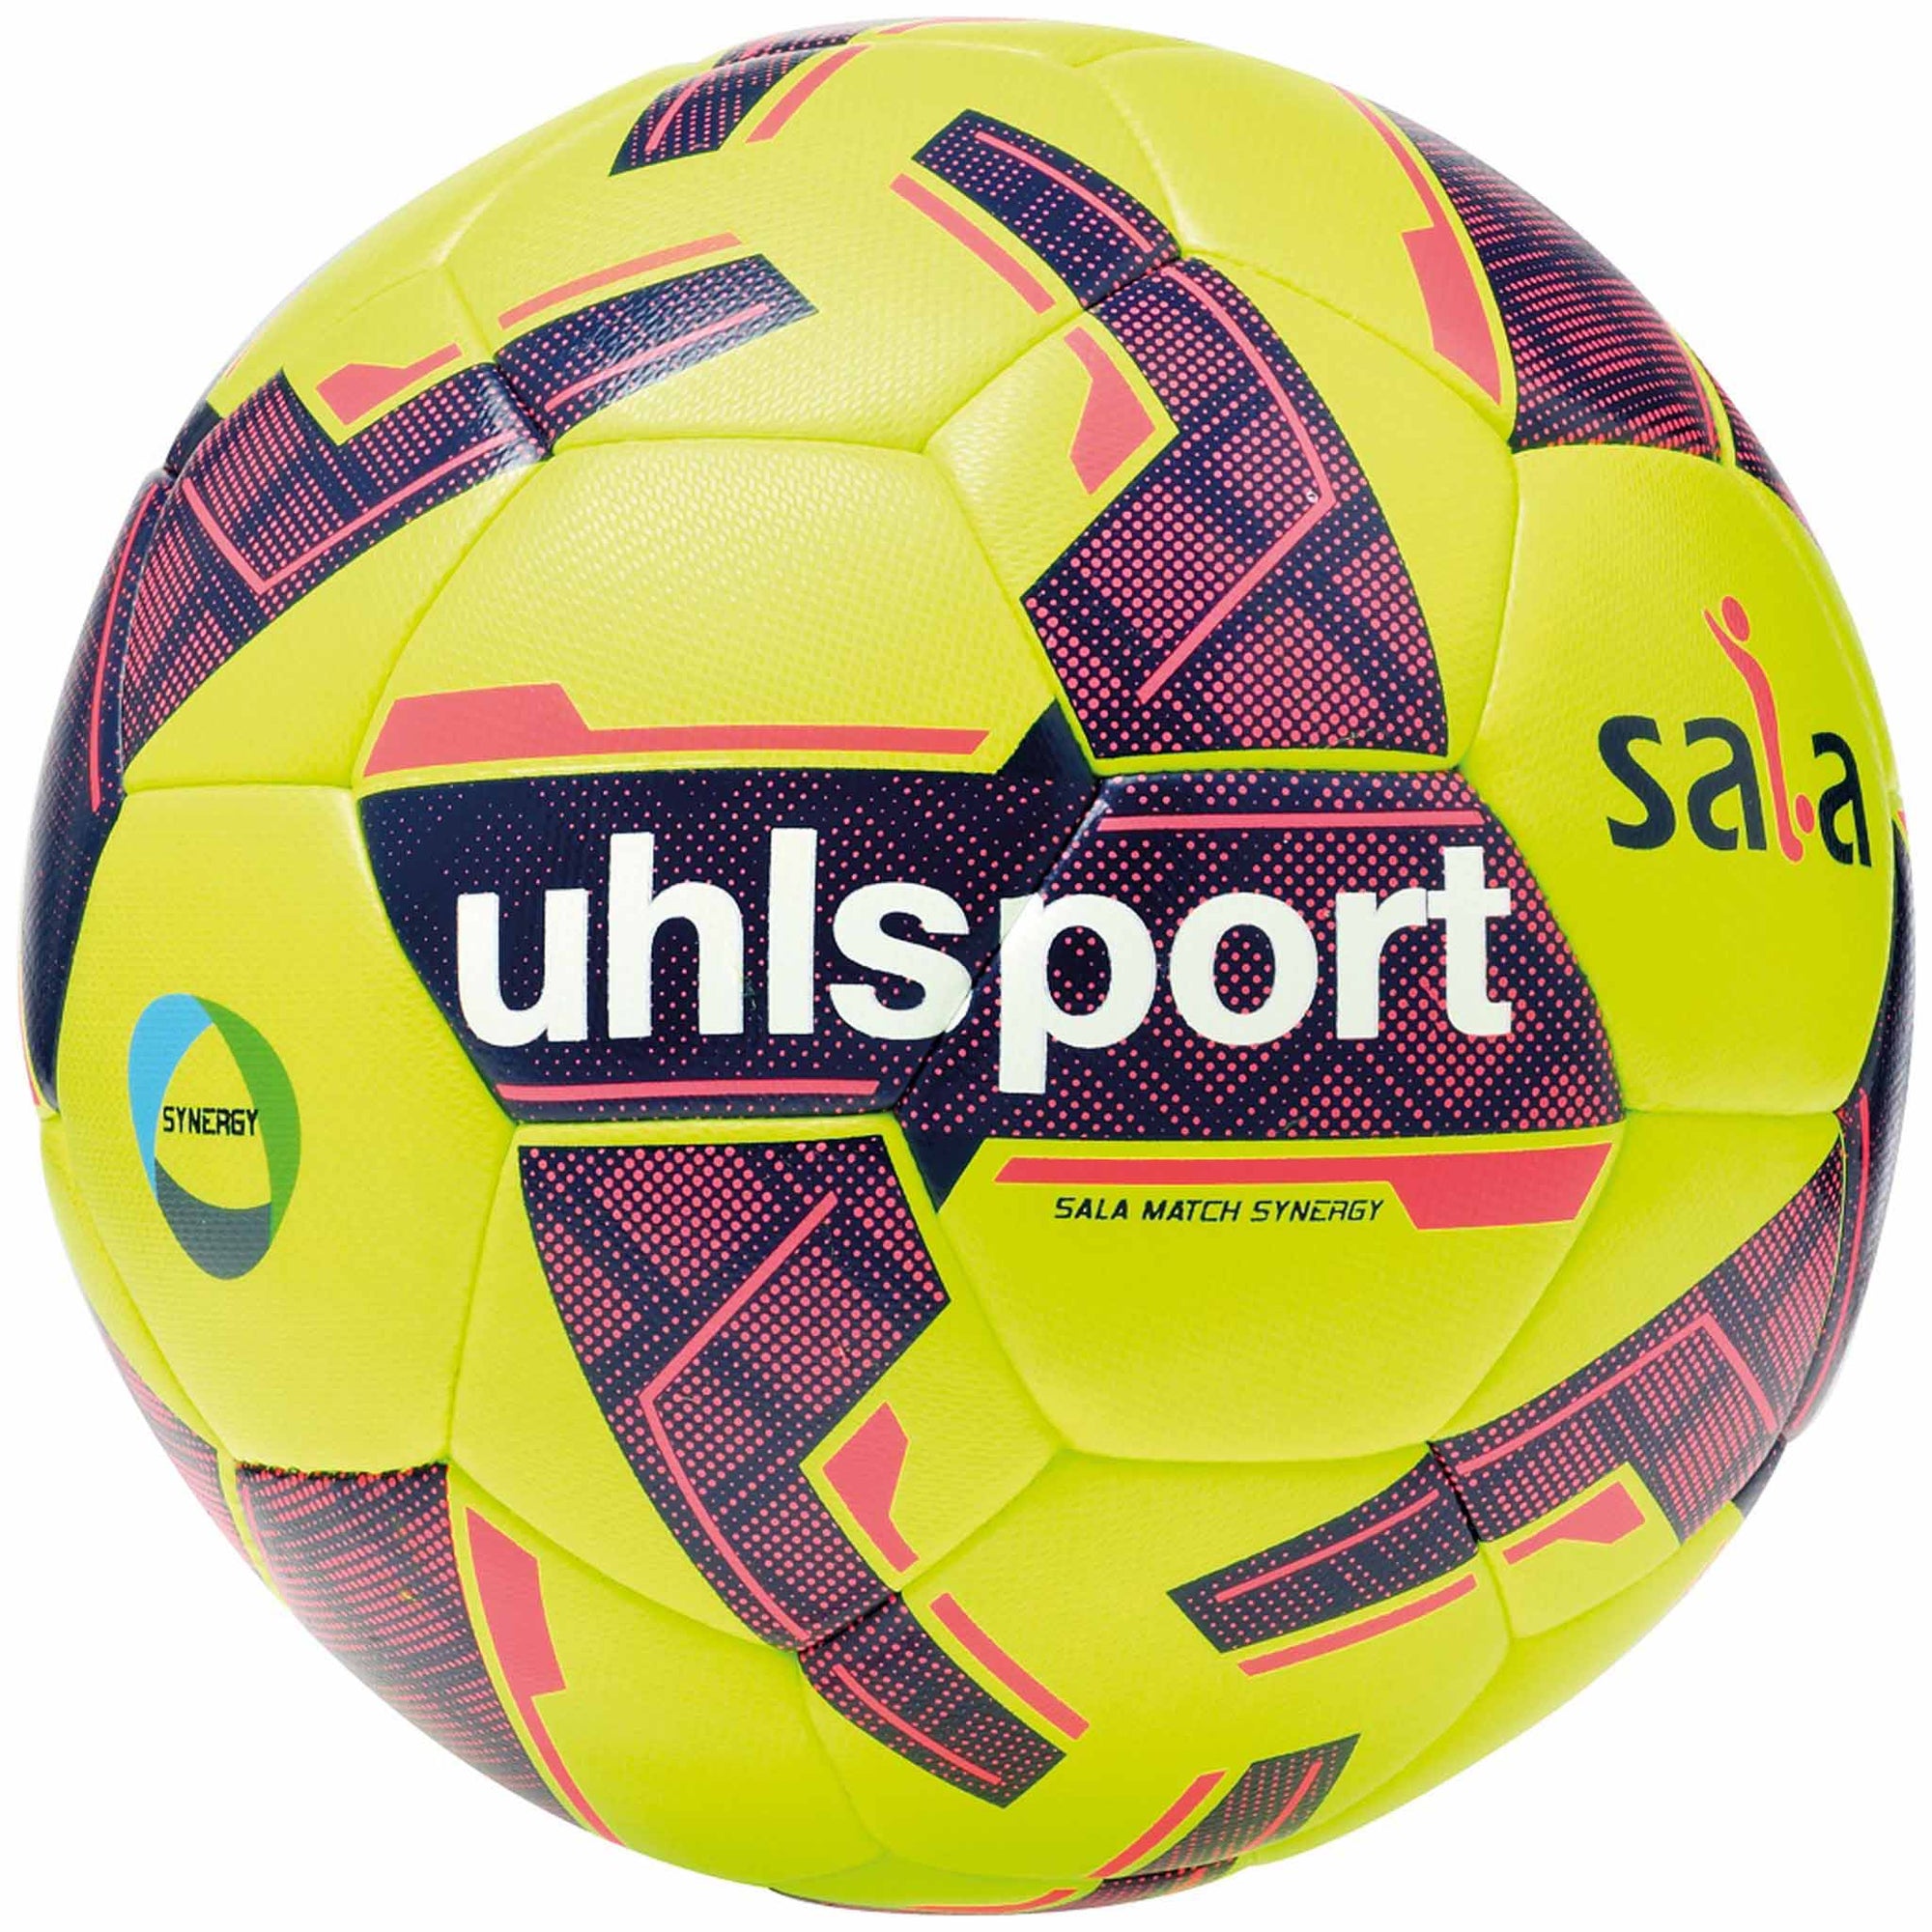 Uhlsport Sala Match Synergy ballon de futsal - Jaune